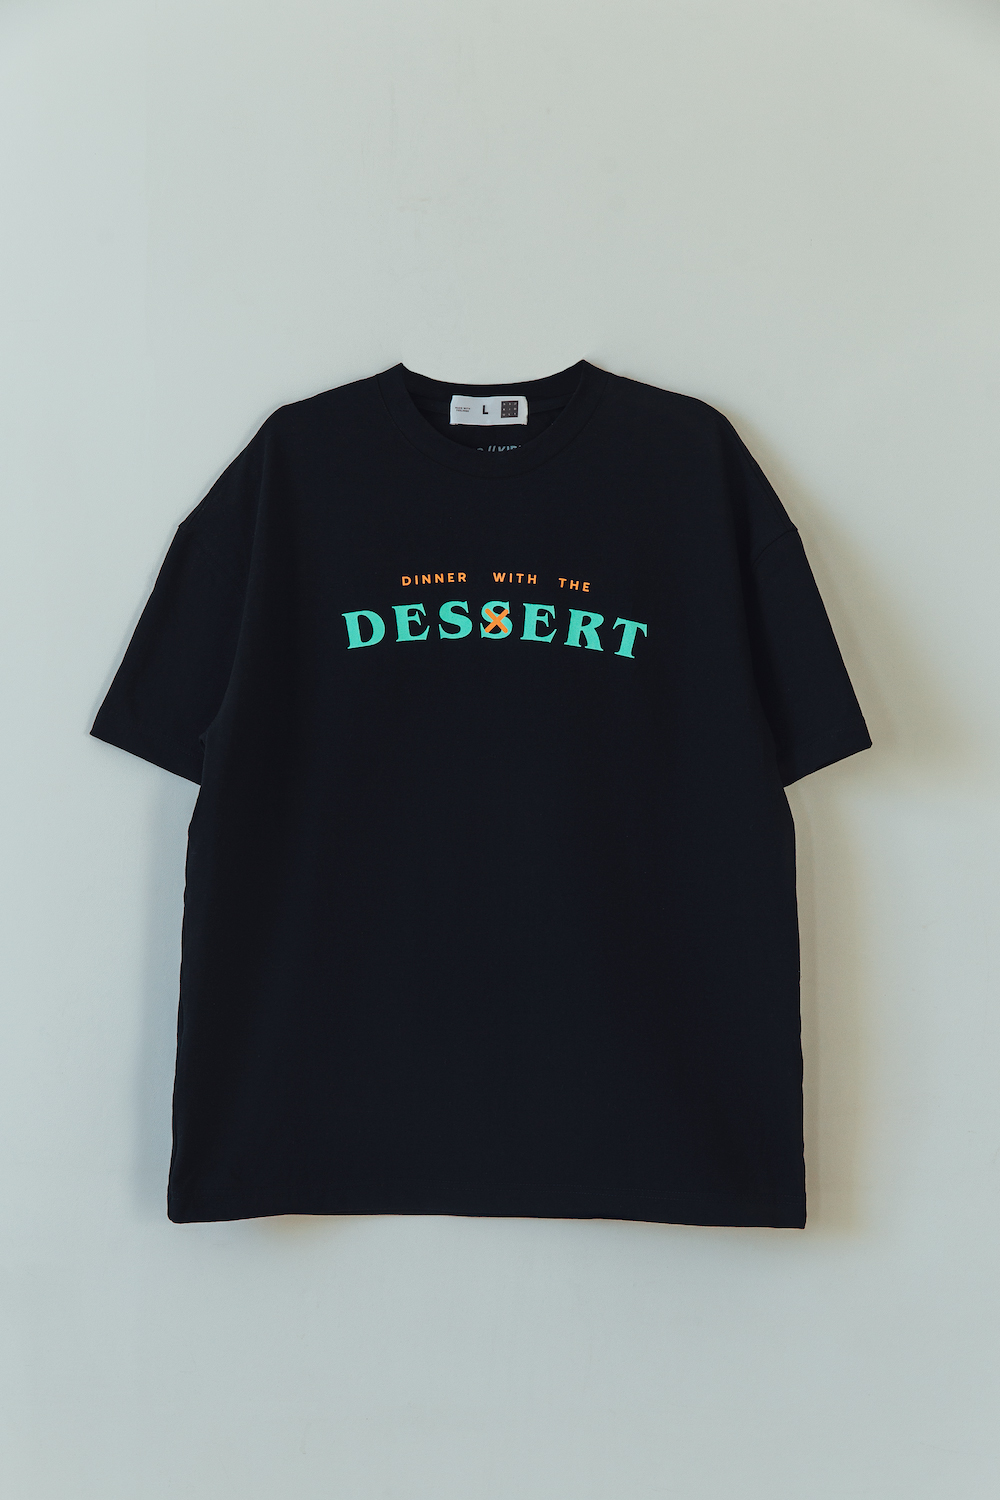 93//Kidult брэнд “Dinner With The Dessert (Desert)” CH.1 цуглуулгаа танилцууллаа (фото 17)